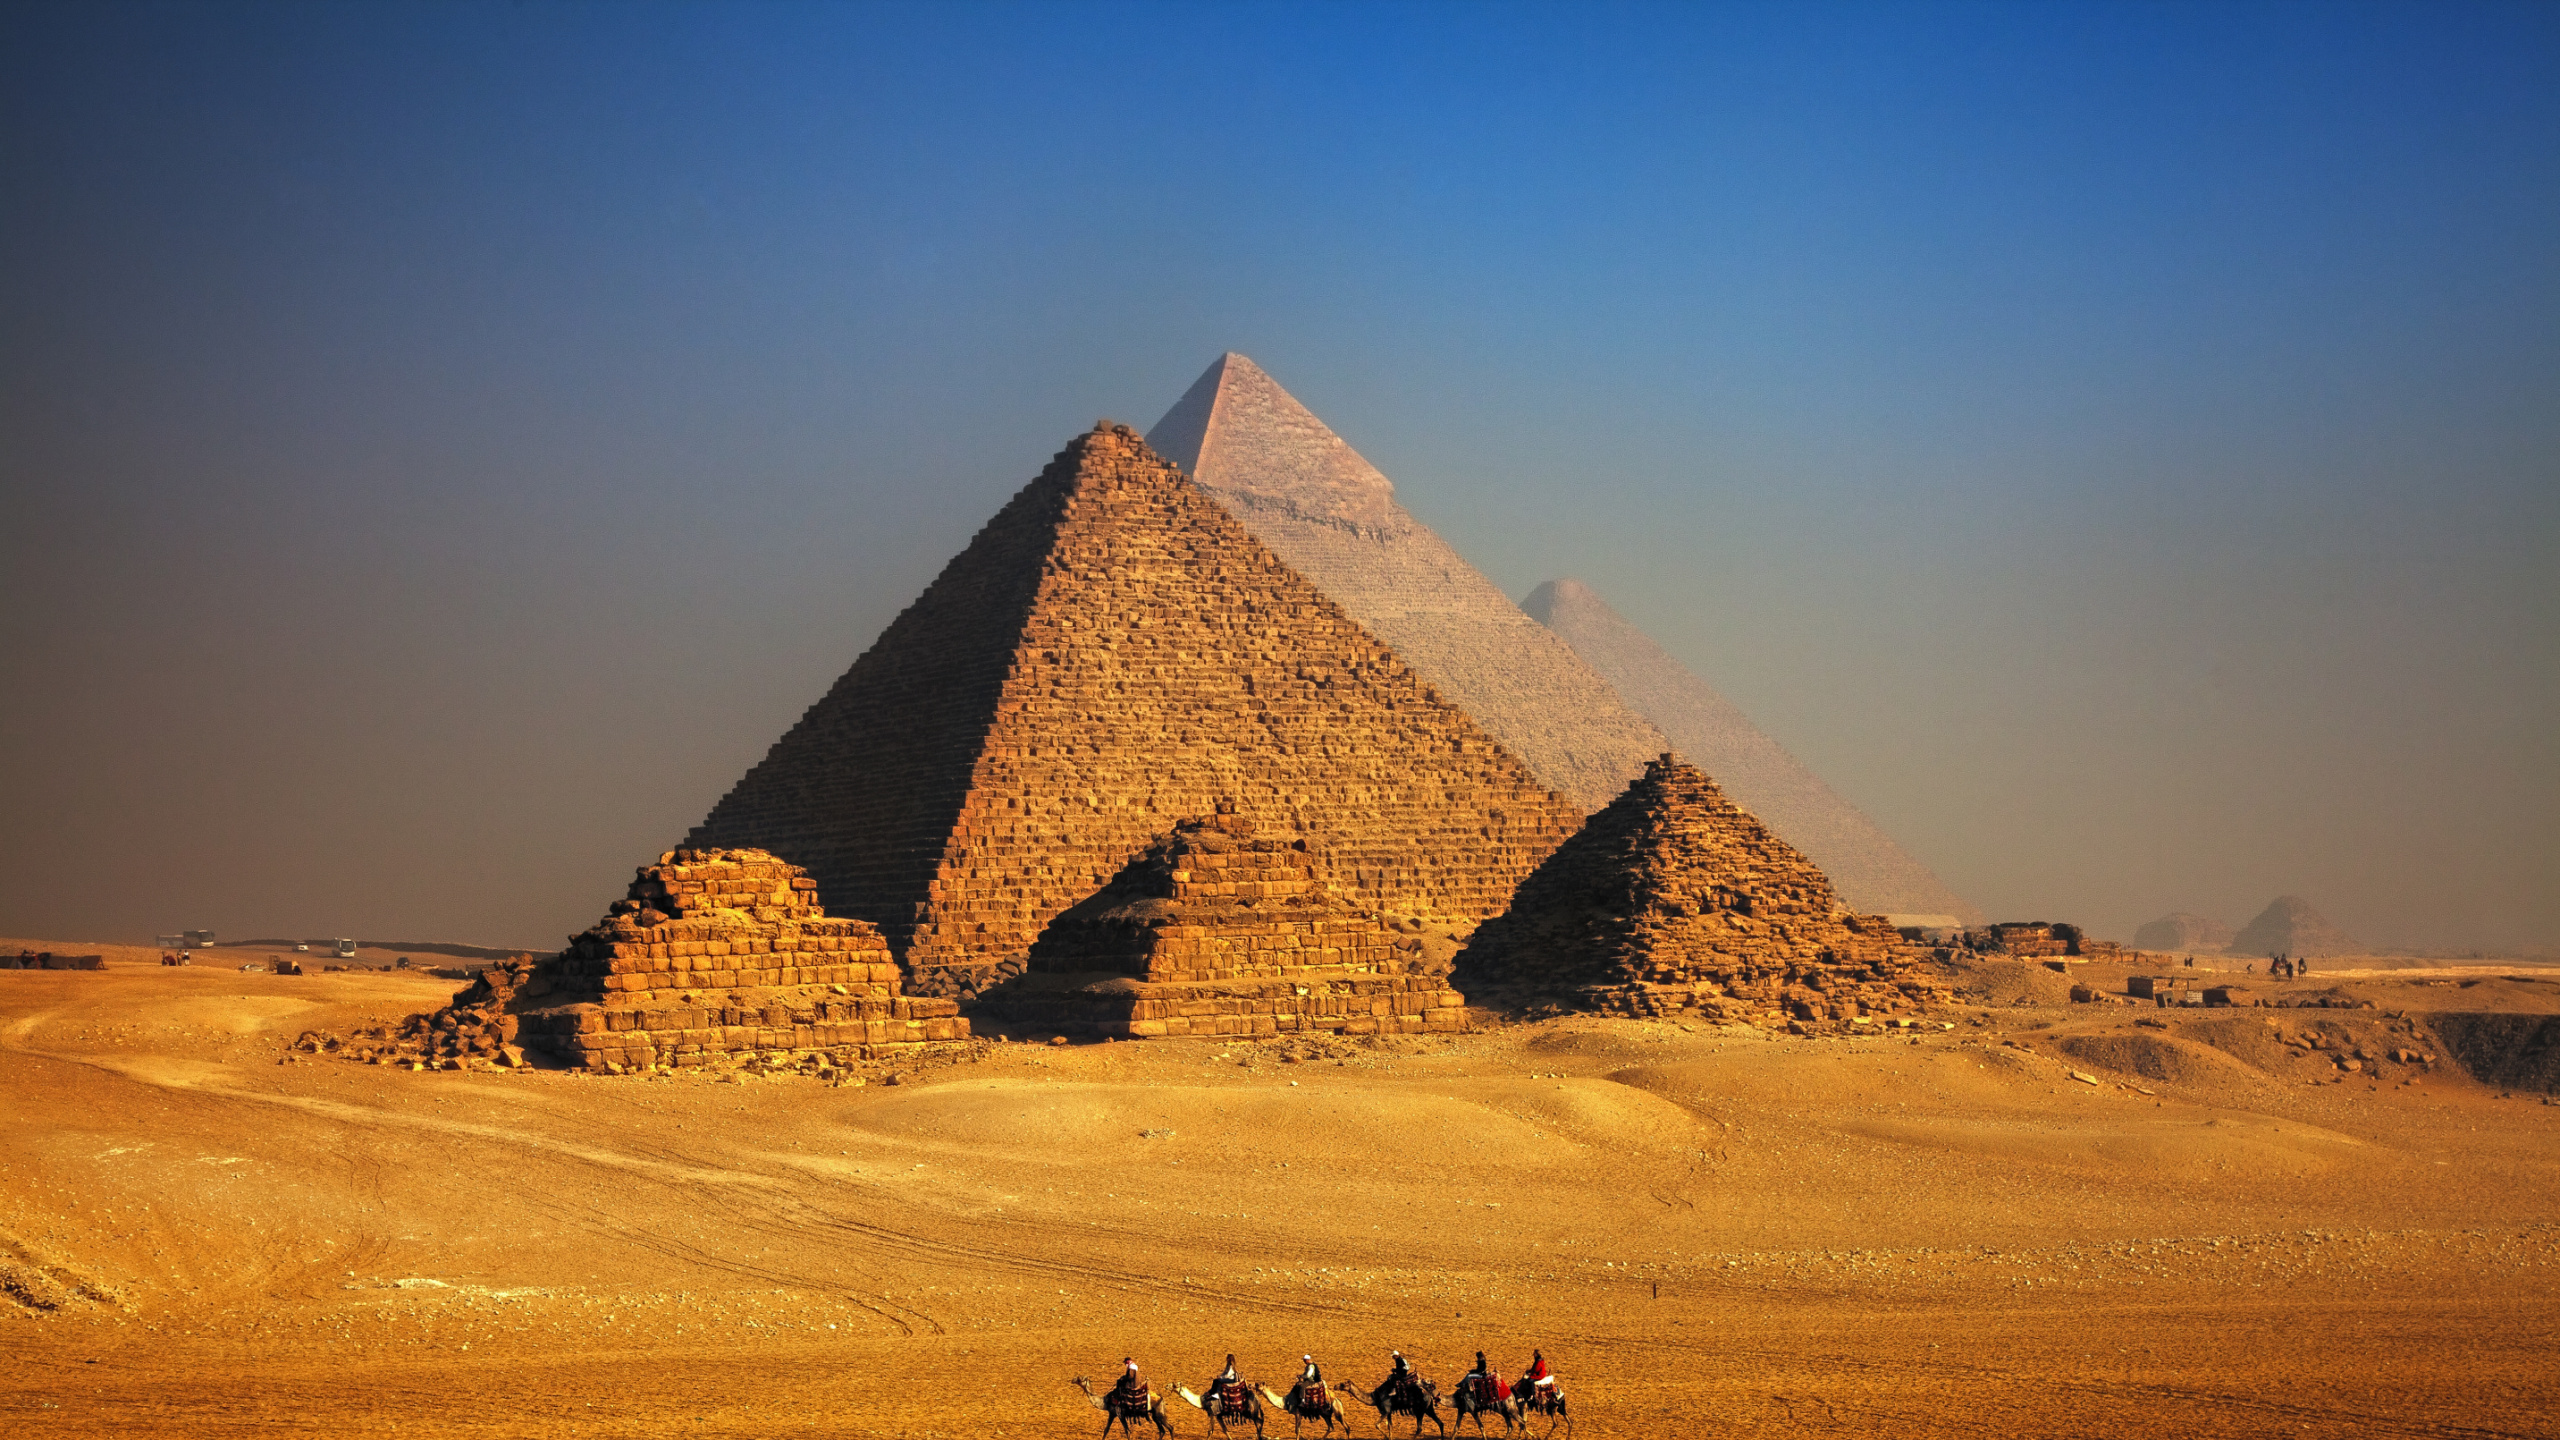 Brown Pyramid on Desert During Daytime. Wallpaper in 2560x1440 Resolution